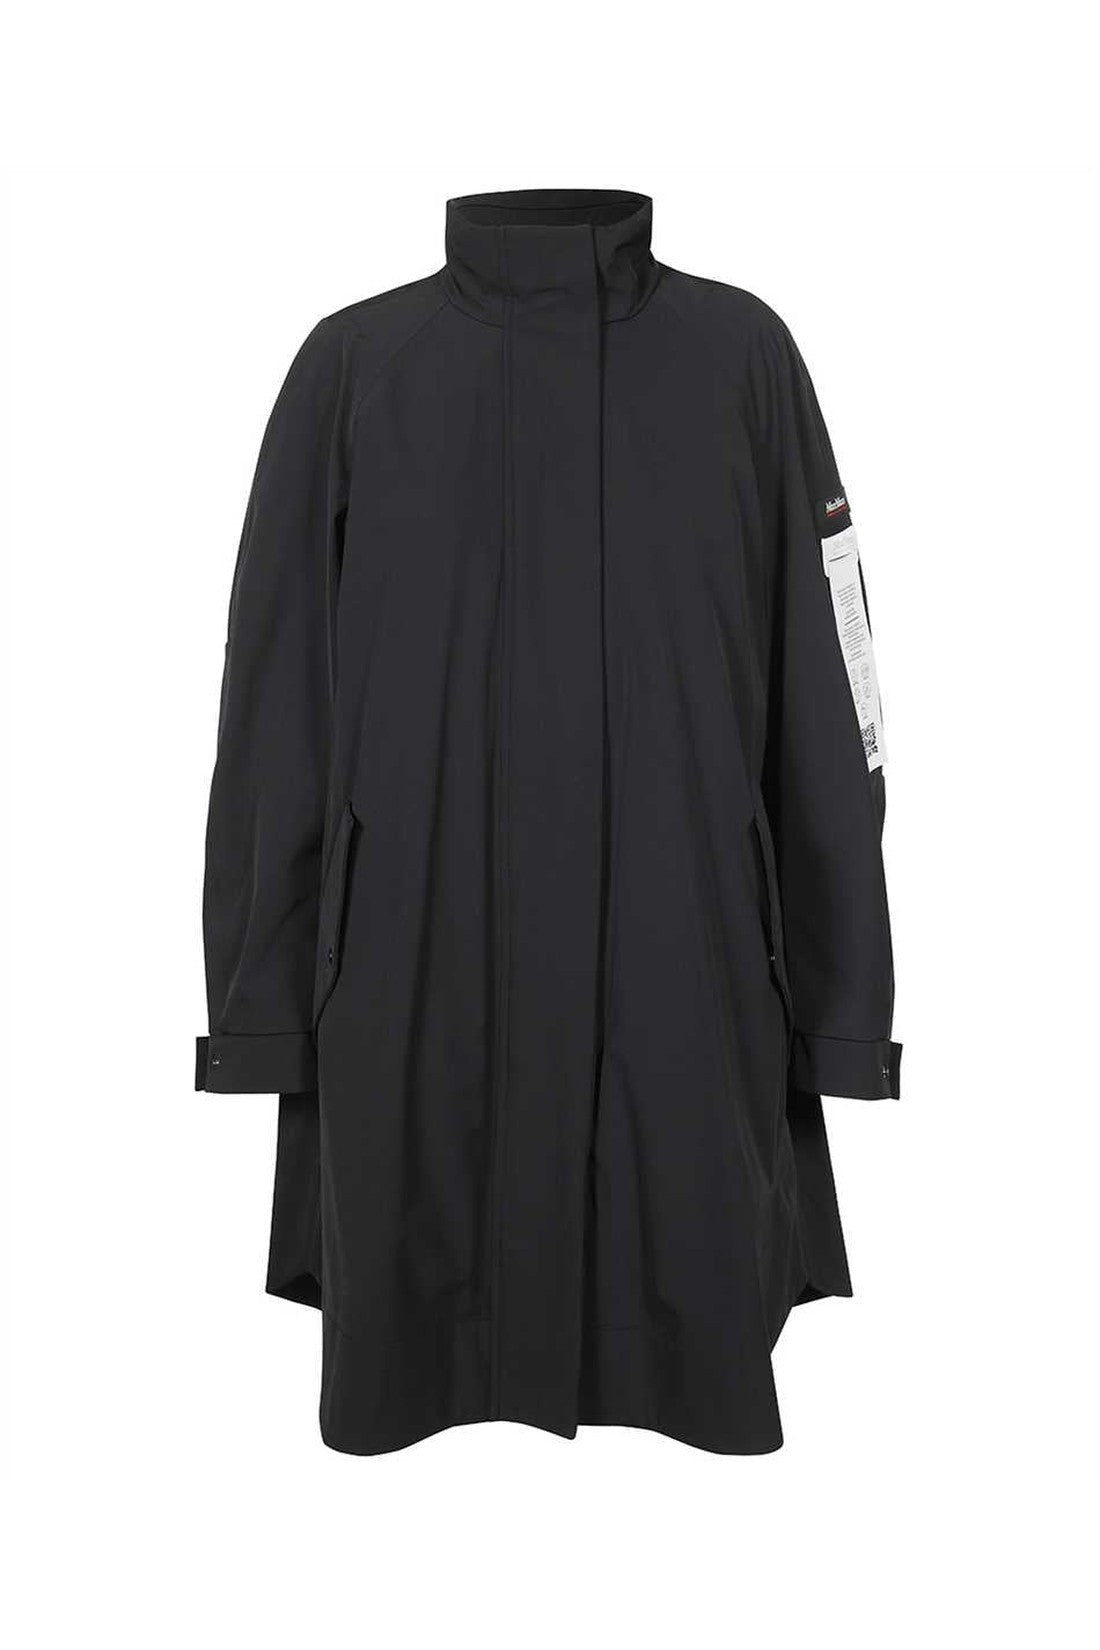 Nylon jacket-Max Mara-OUTLET-SALE-30-ARCHIVIST